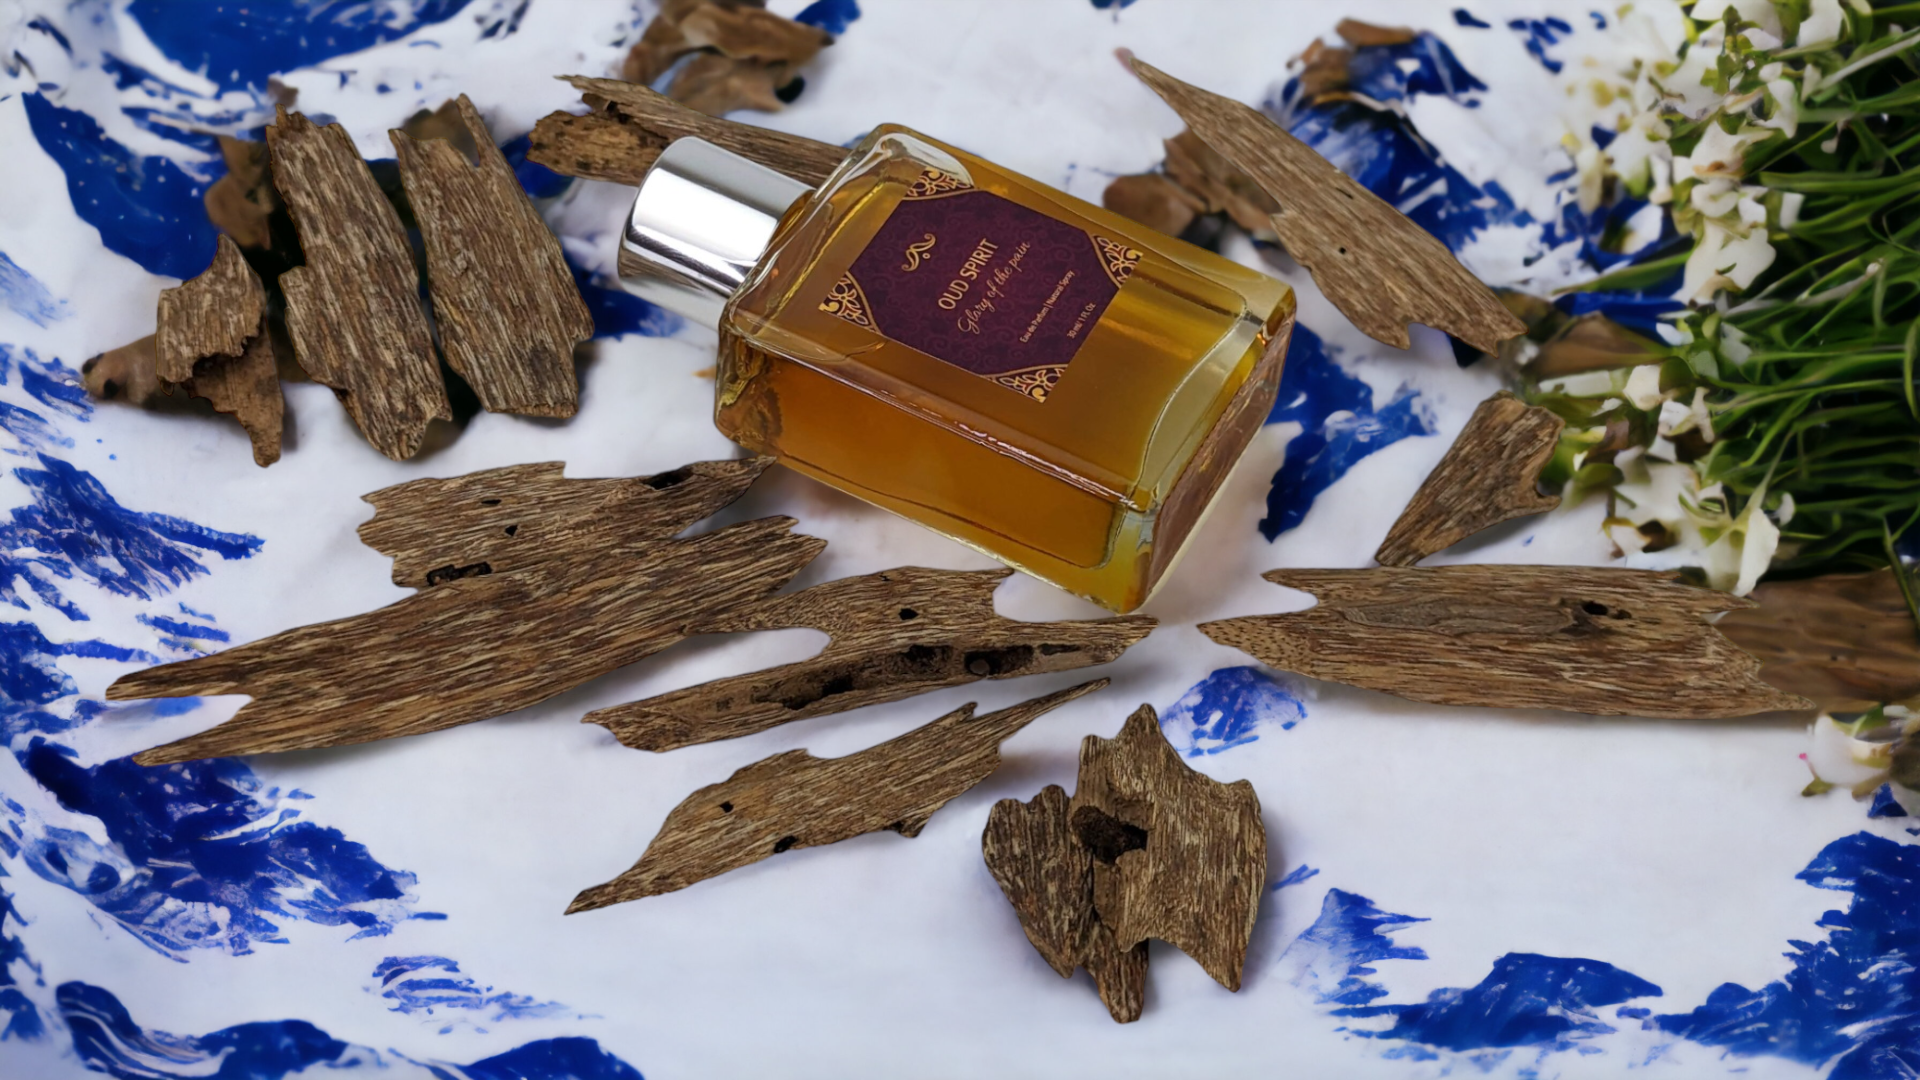 Grandawood Agarwood Oud Perfume: OUD SPIRIT- GLORY OF THE PAIN- perfume - 30ML FULL BOTTLE- FREE 0.5ML PURE SMOOTH THAI OUD / OIL-BASED ALCOHOL FREE